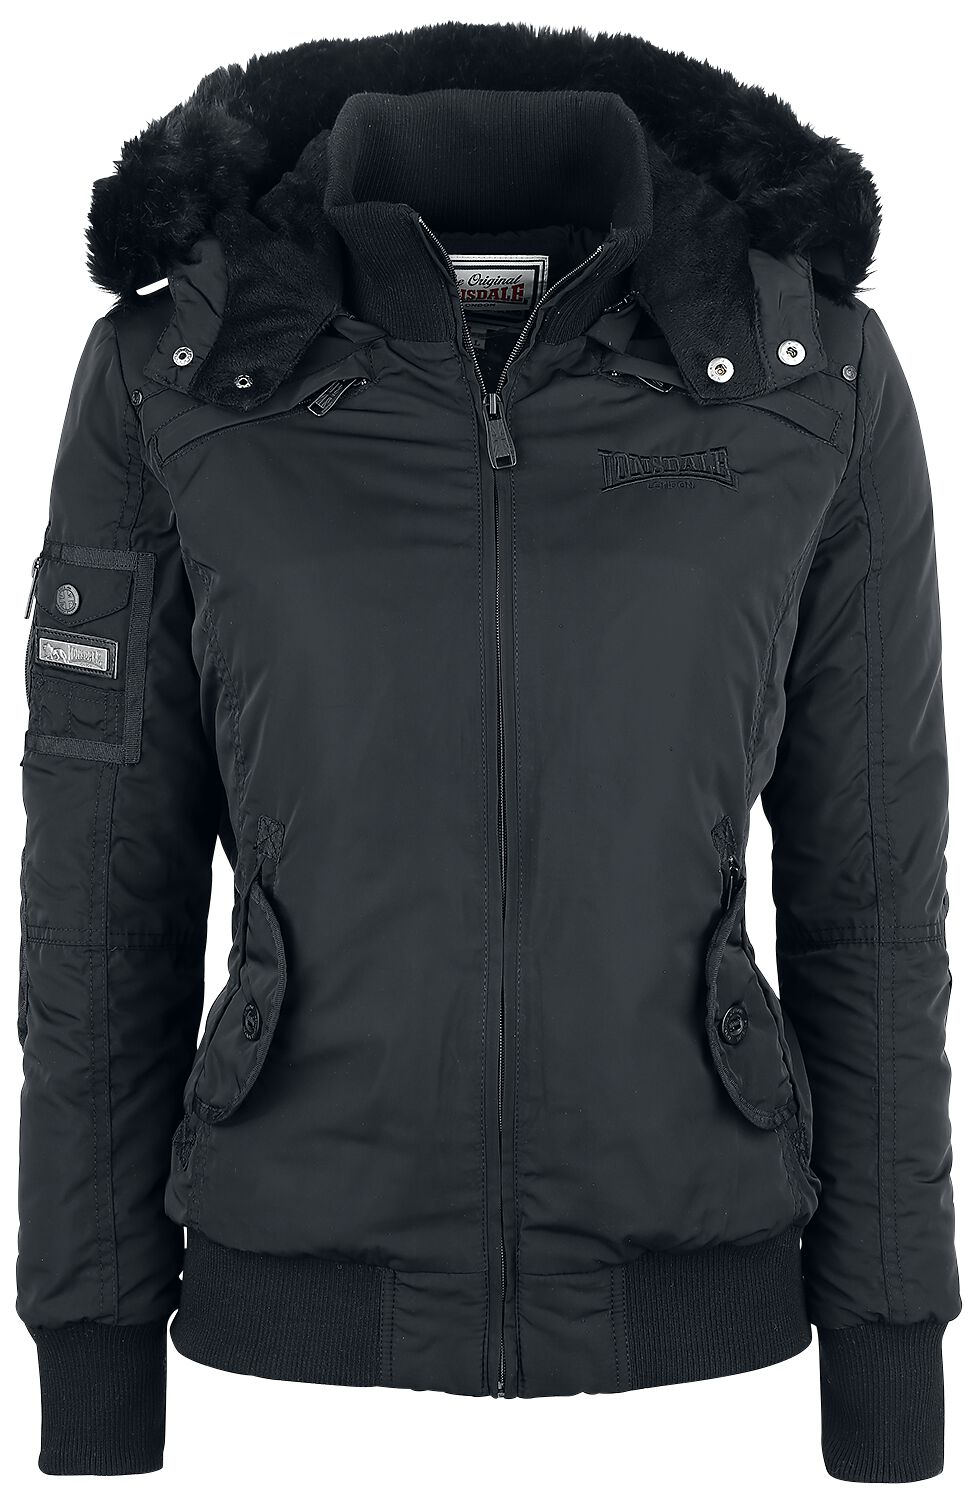 Lonsdale London Ulwell Winter Jacket black